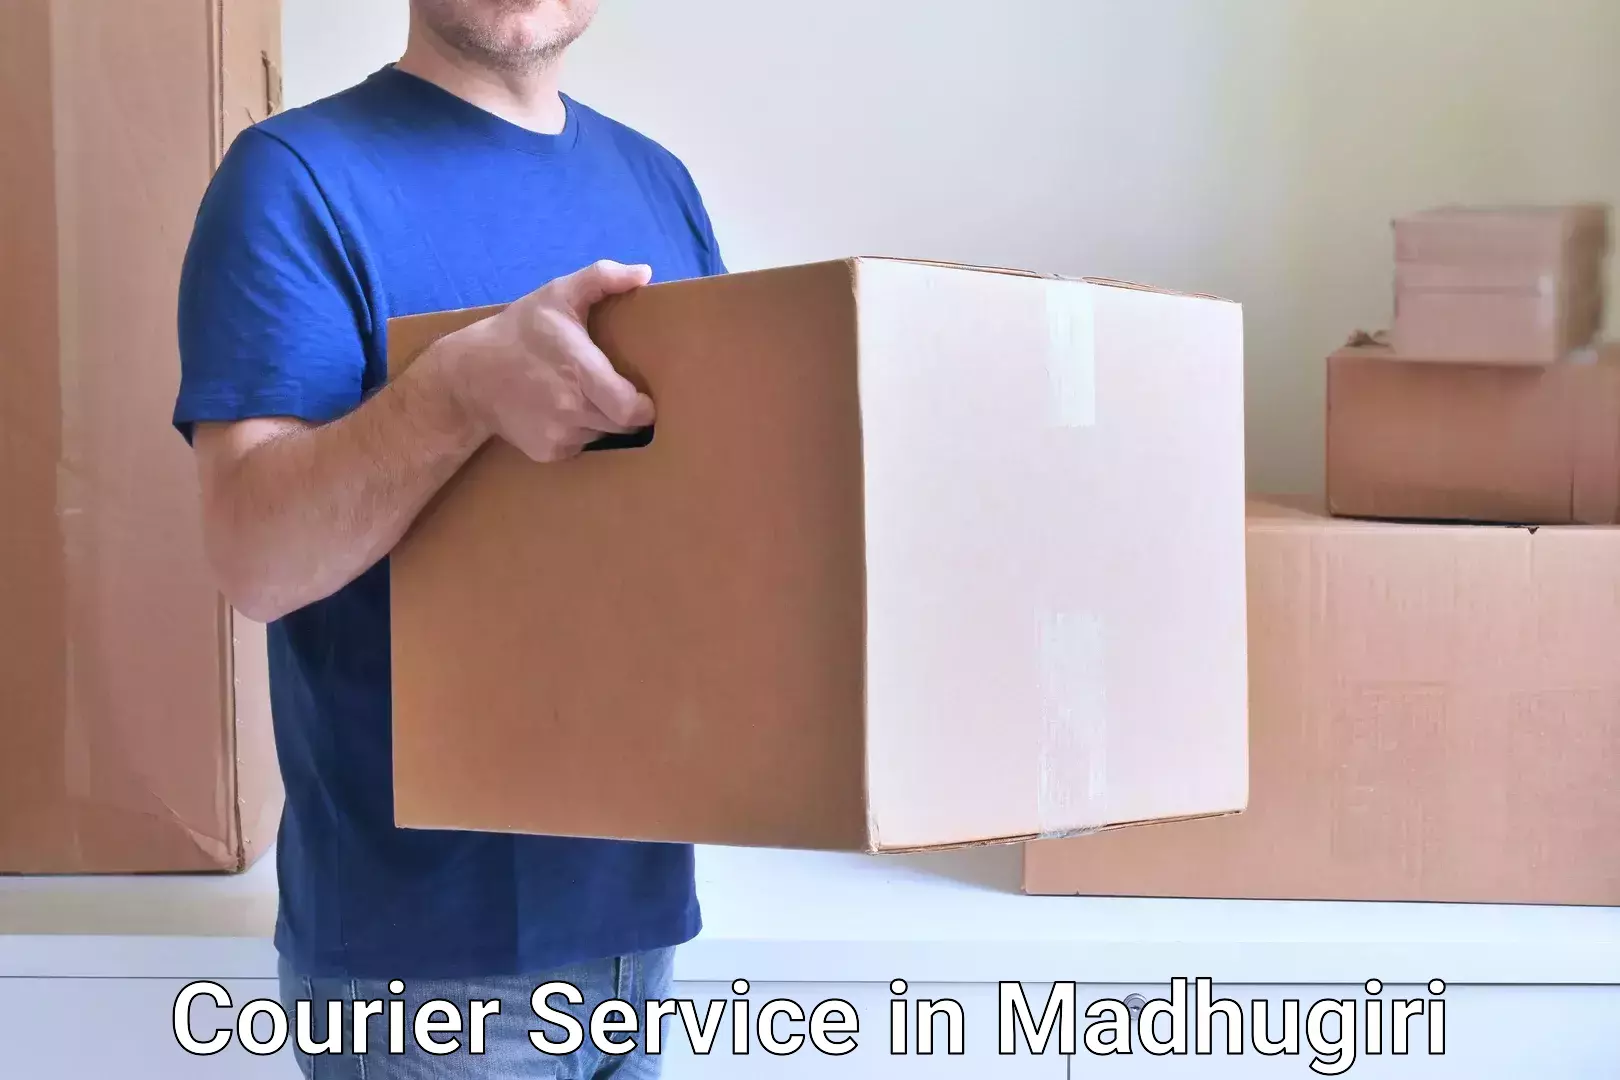 Budget-friendly shipping in Madhugiri